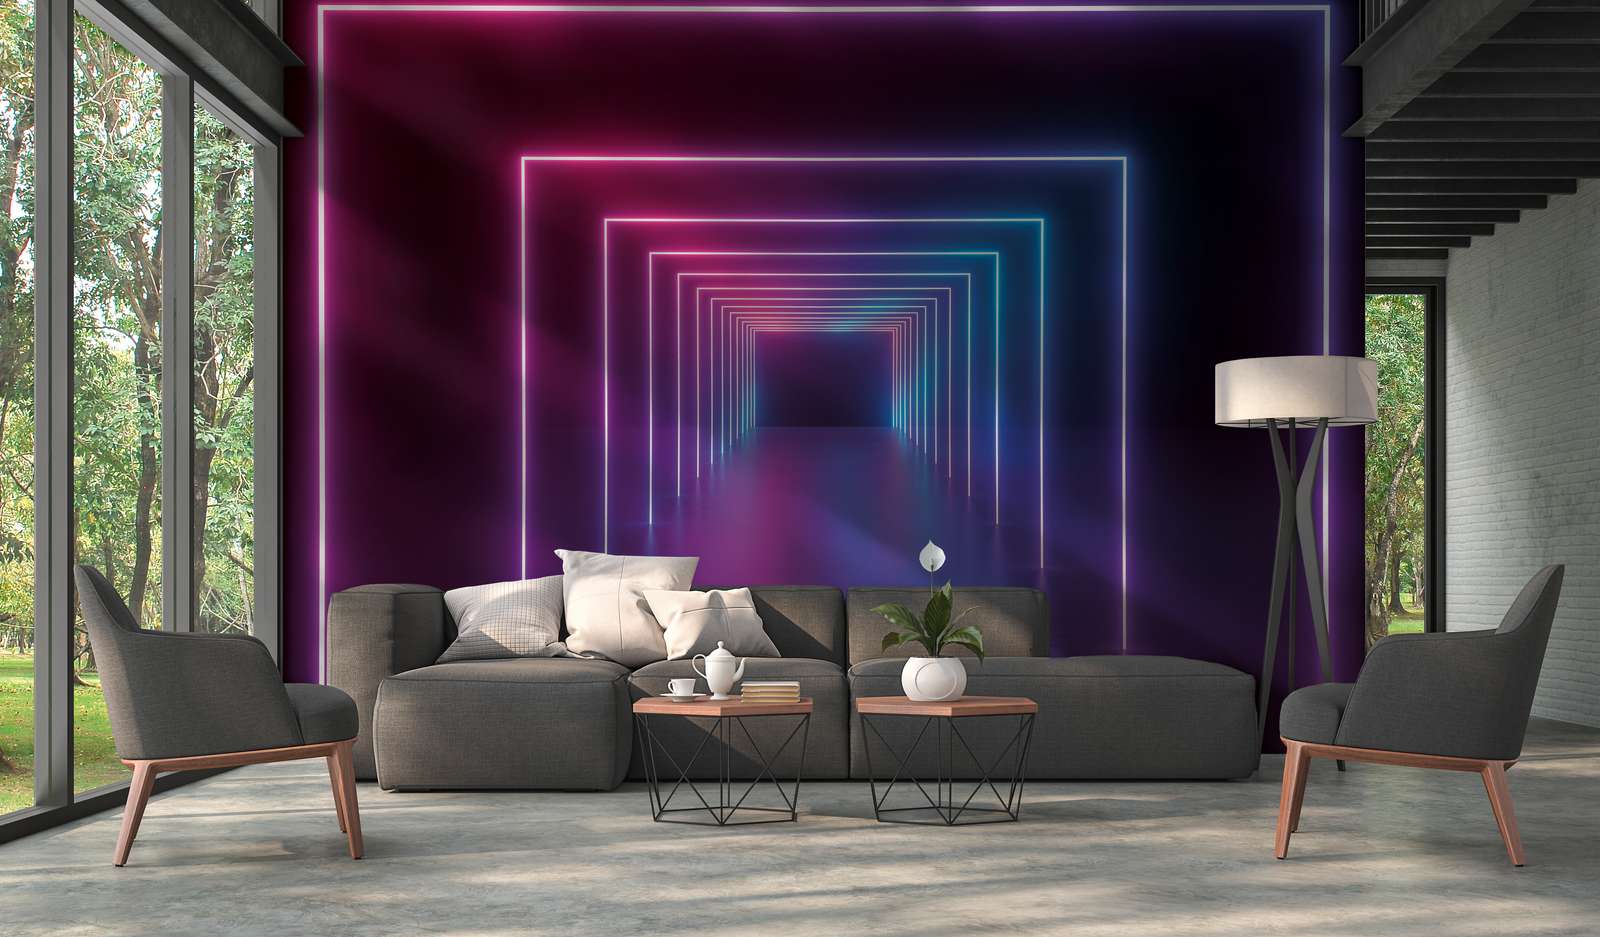             Photo wallpaper Room with long corridor LED colours - Purple, Blue, Neon
        